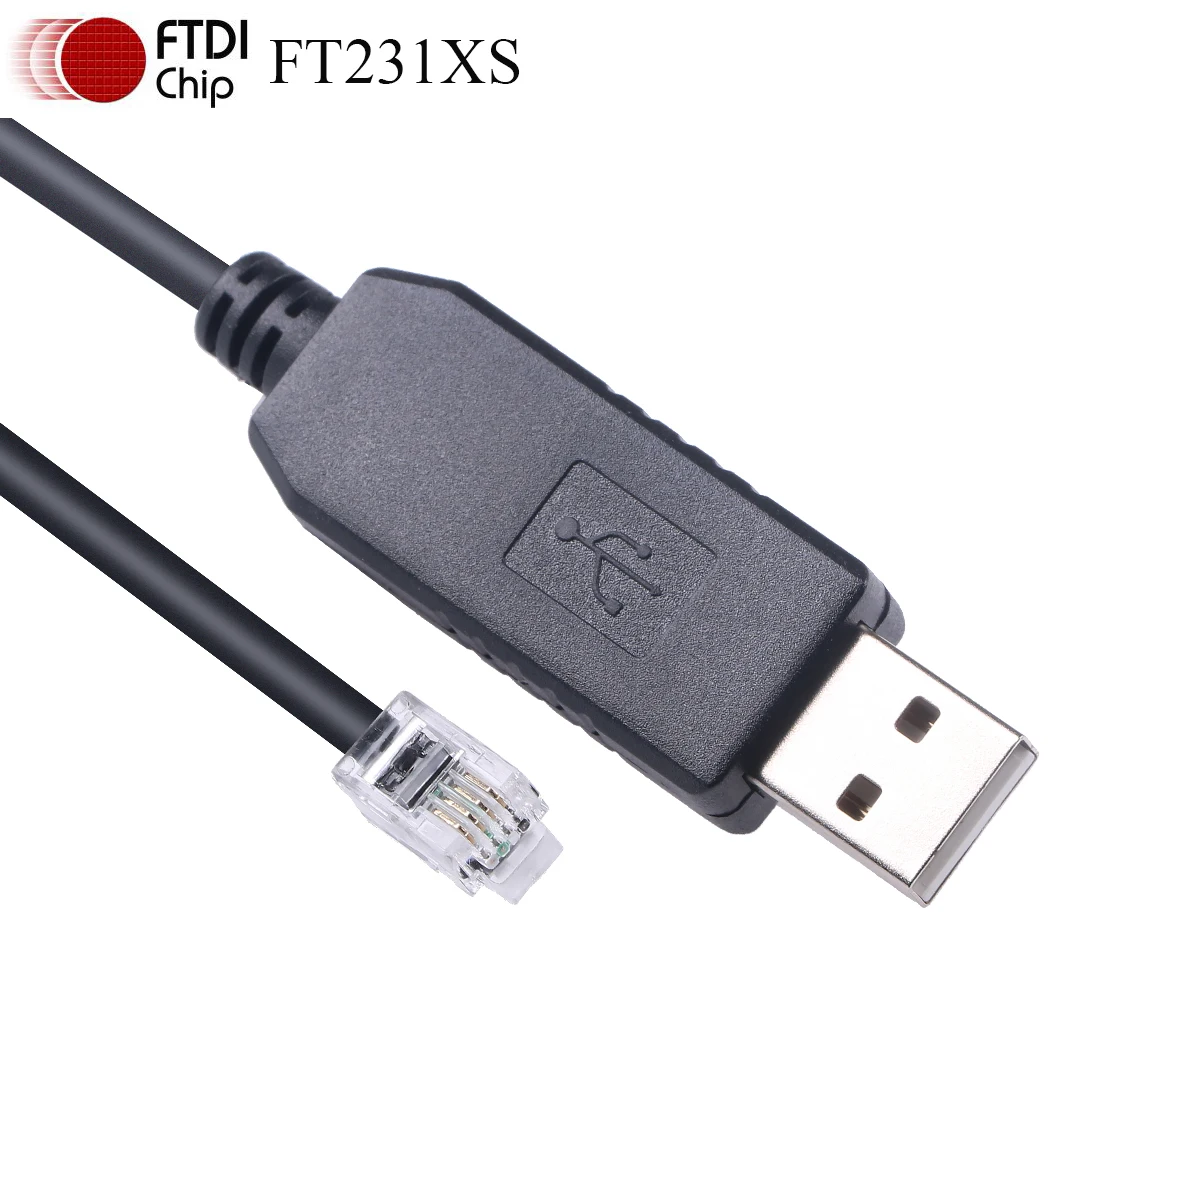 Cable Industrial FTDI FT231XS USB a RJ9 Serial para Celestron Nexstar 4SE,6SE,...